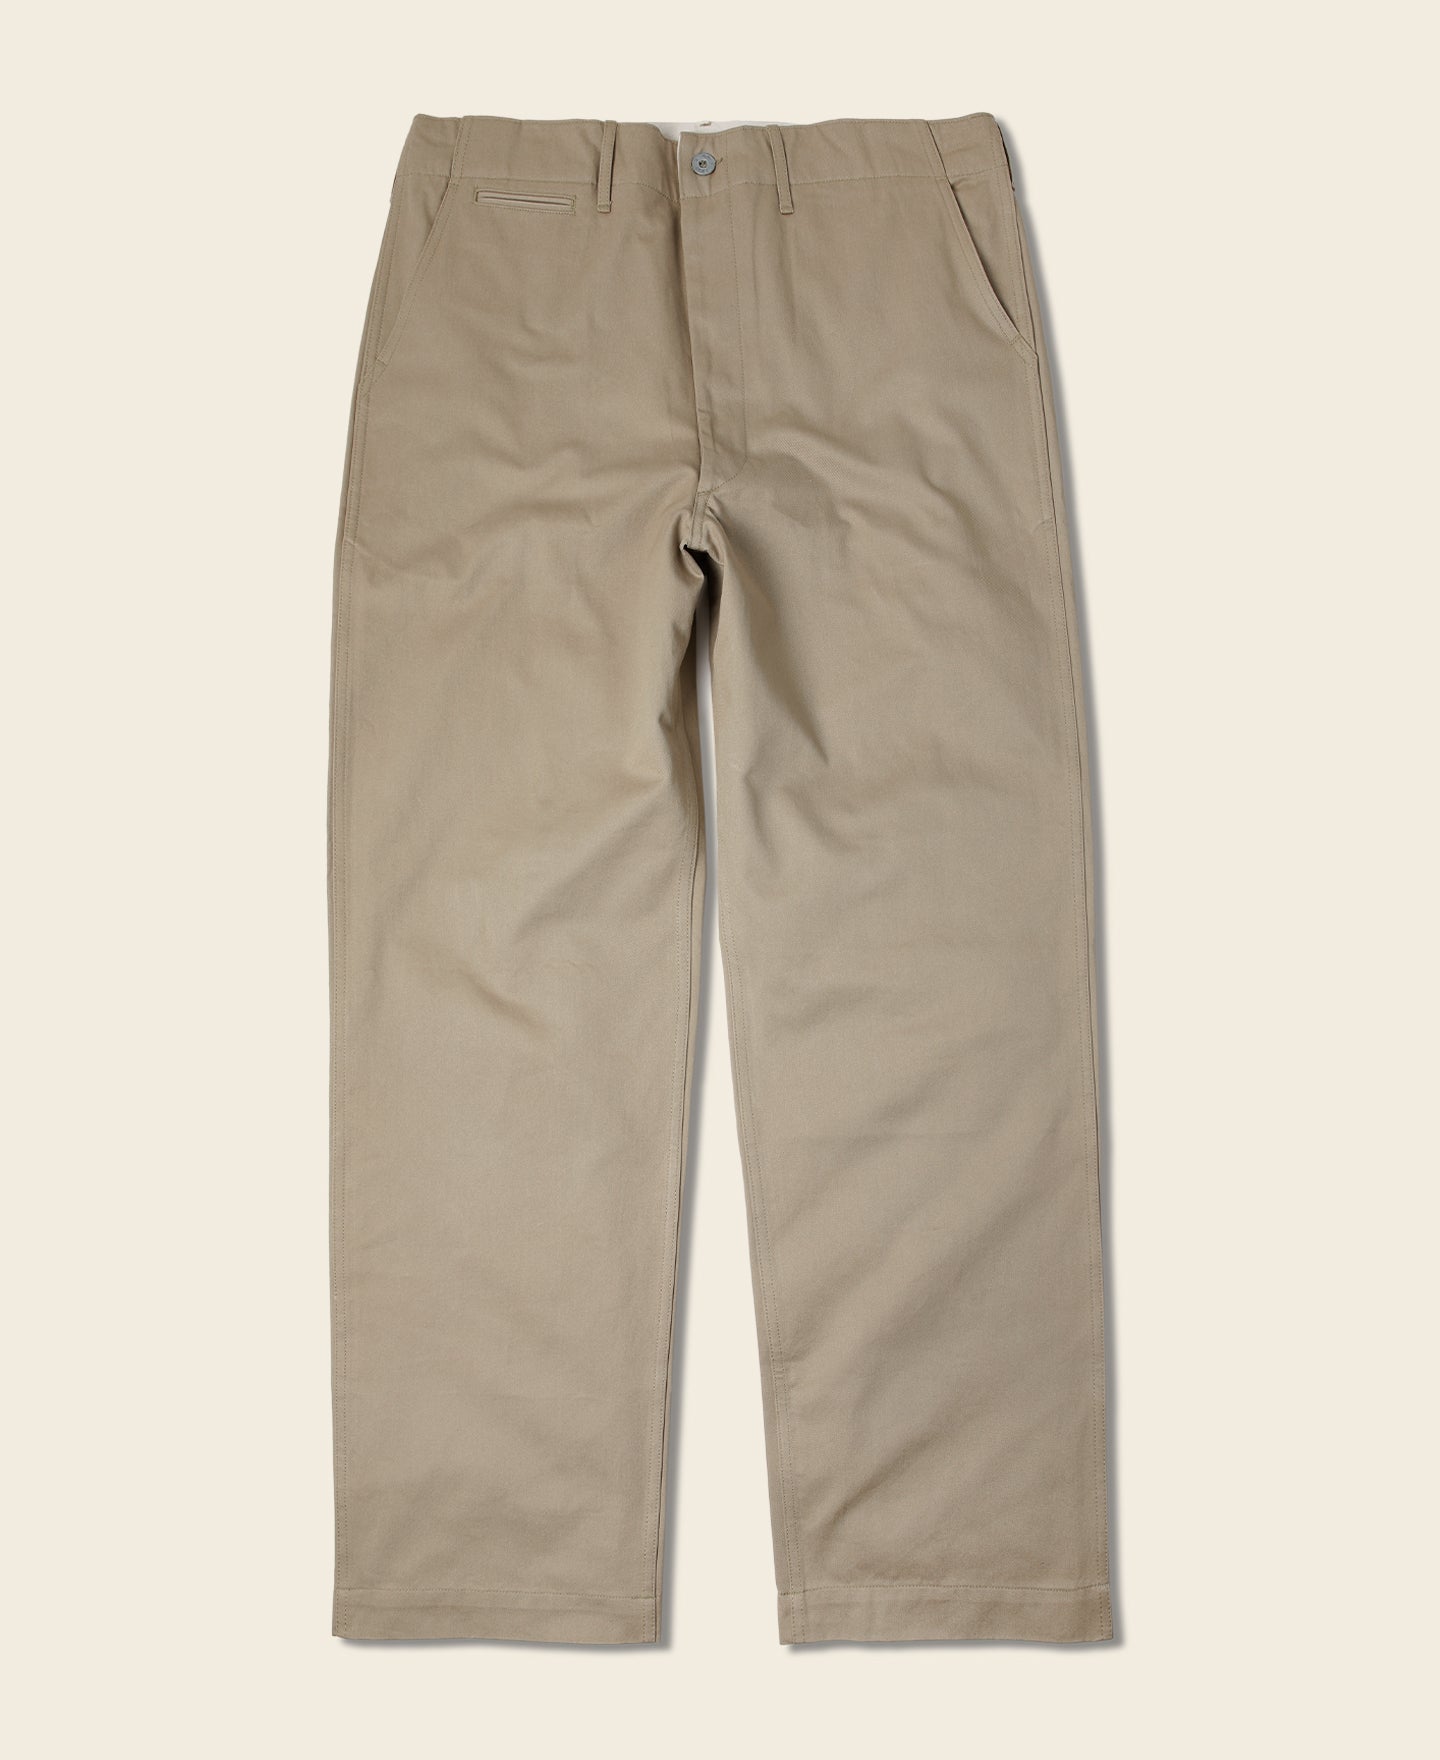 Buy Men Urban Fit Polyester Blend Trouser Online | Indian Terrain